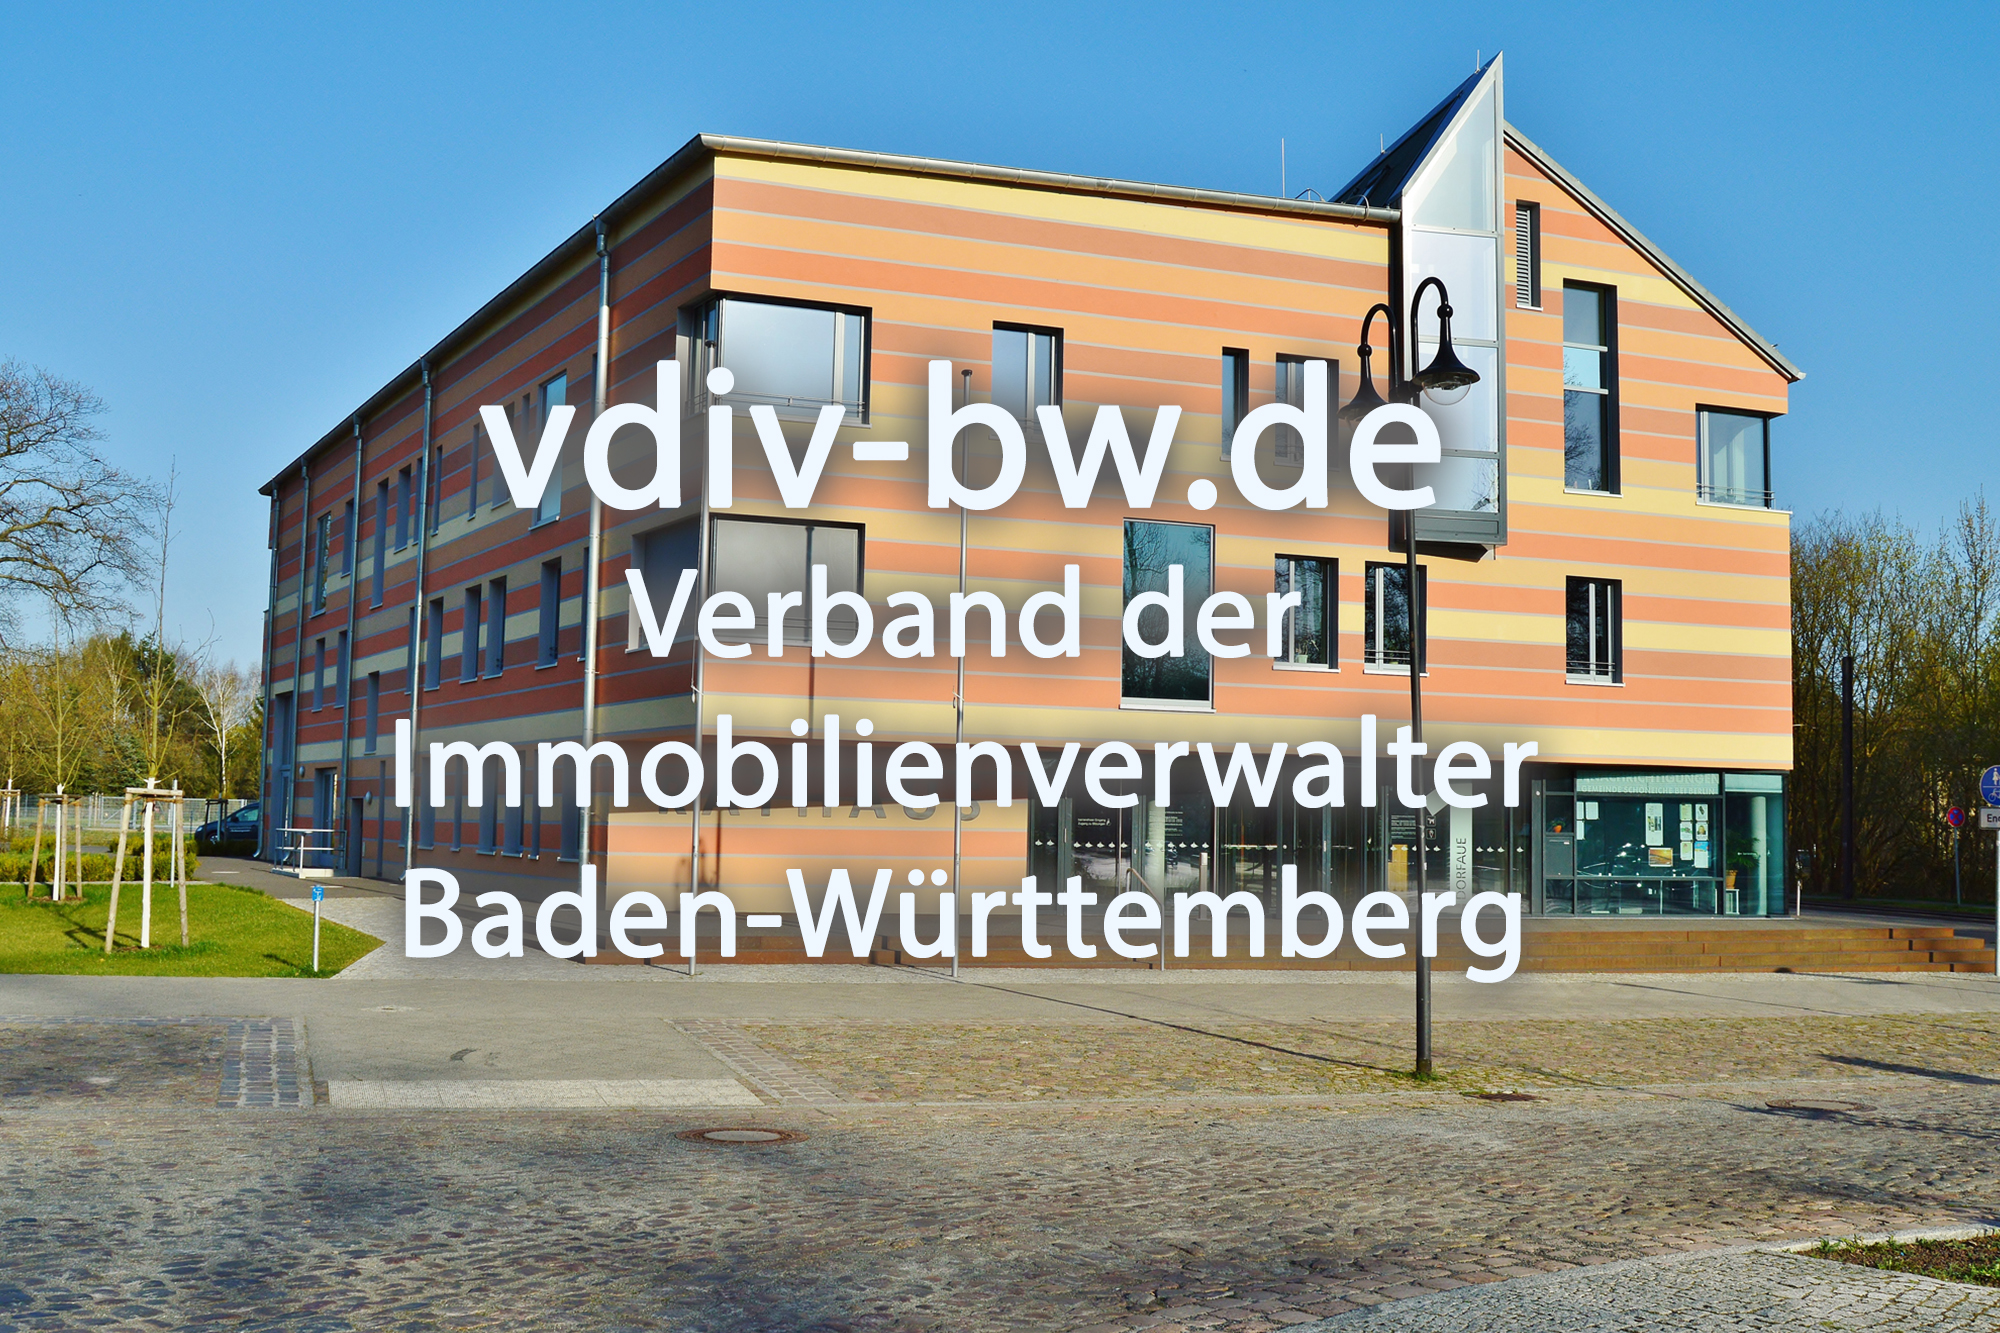 vdiv-bw Verband der Immobilienverwalter Baden-Württemberg